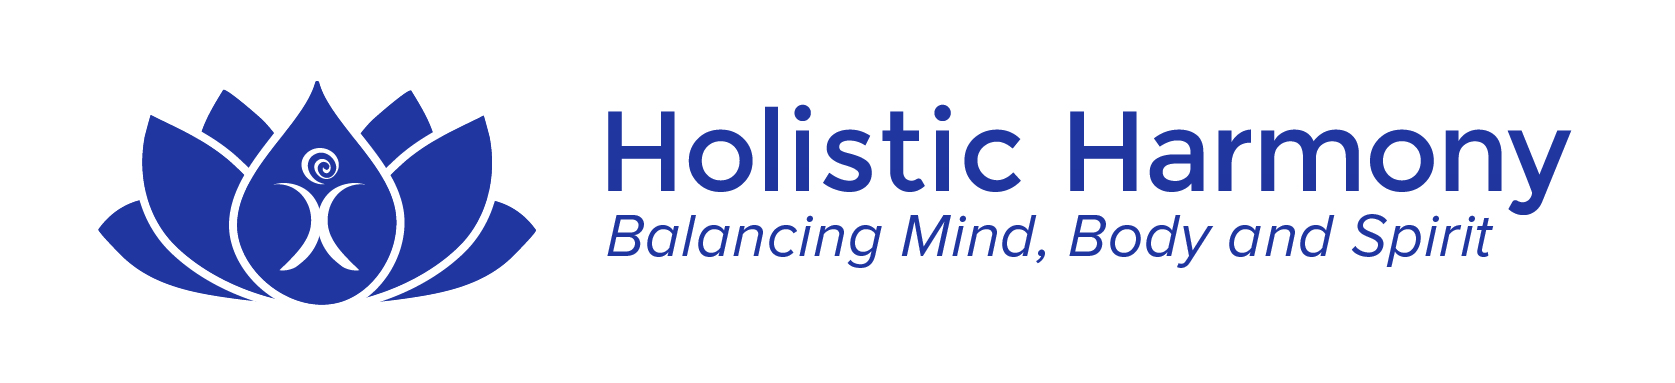 Holistic Harmony Healthcare